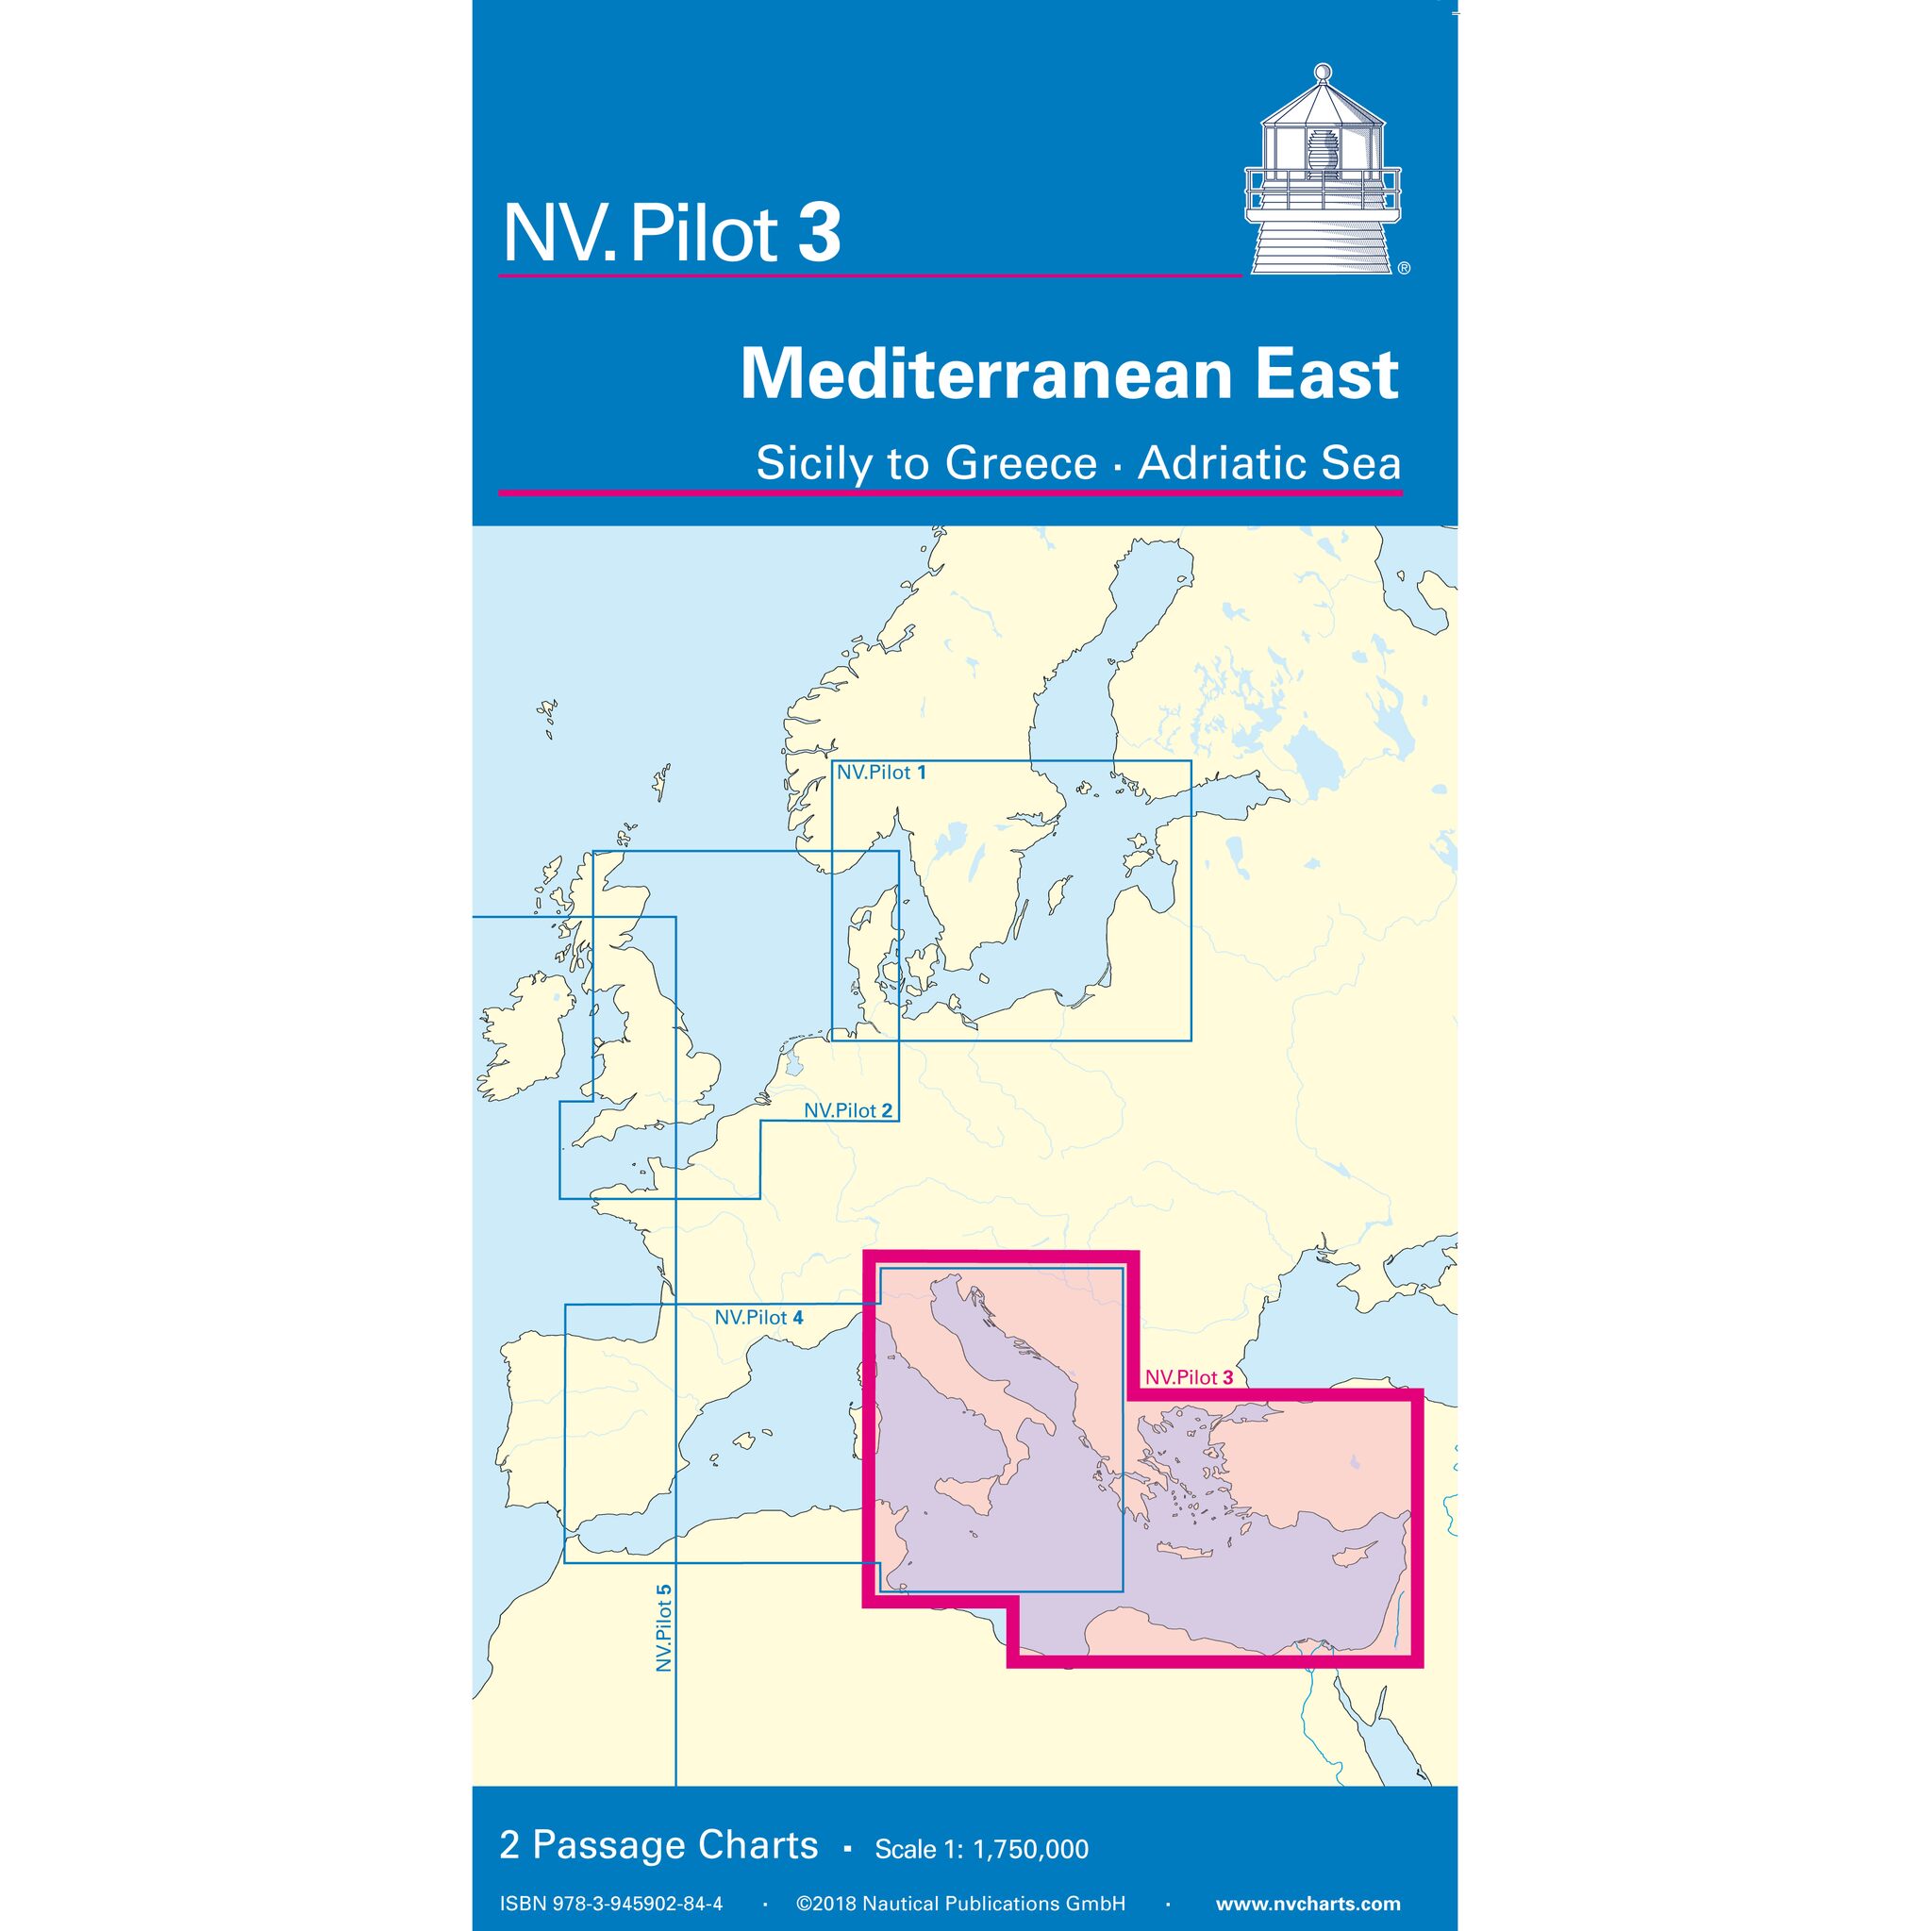 NV Pilot 3 Lotsenkarte Mediterranean East - Sicily to Greece - Adriatic Sea